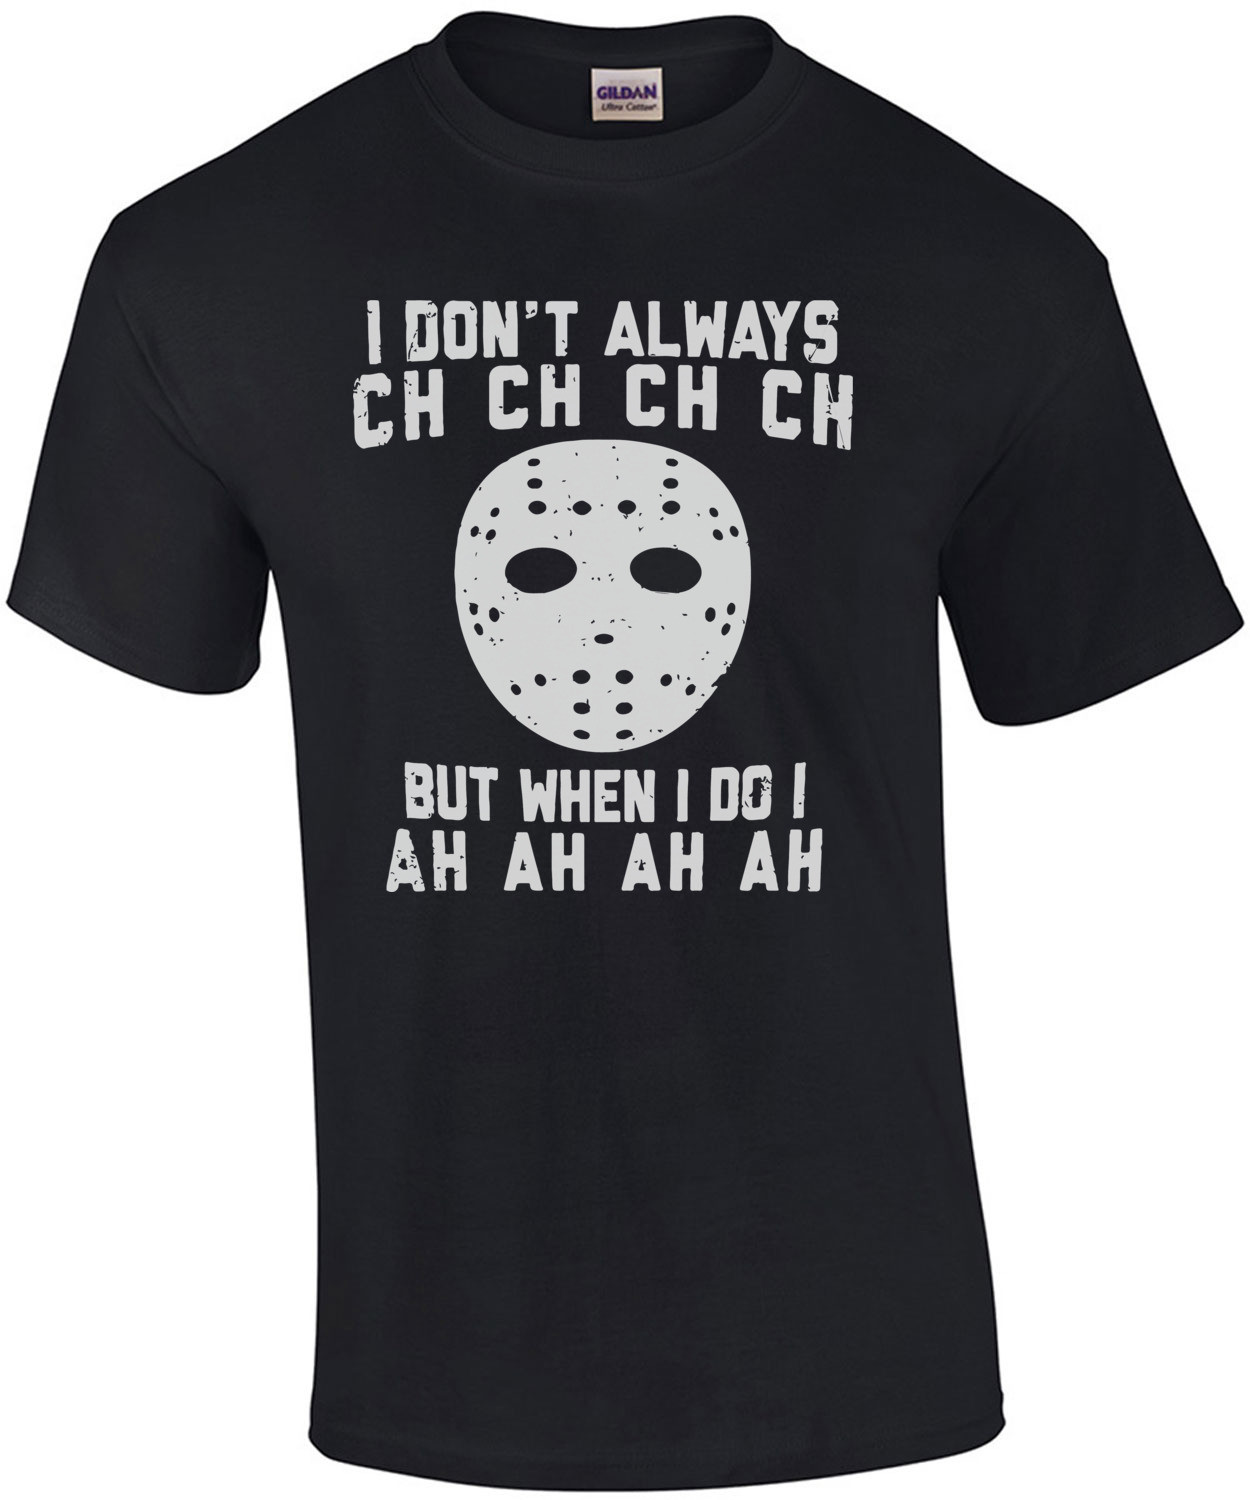 I don't always ch ch ch ch but when I do I ah ah ah ah Jason Voorhees - Friday The 13th 